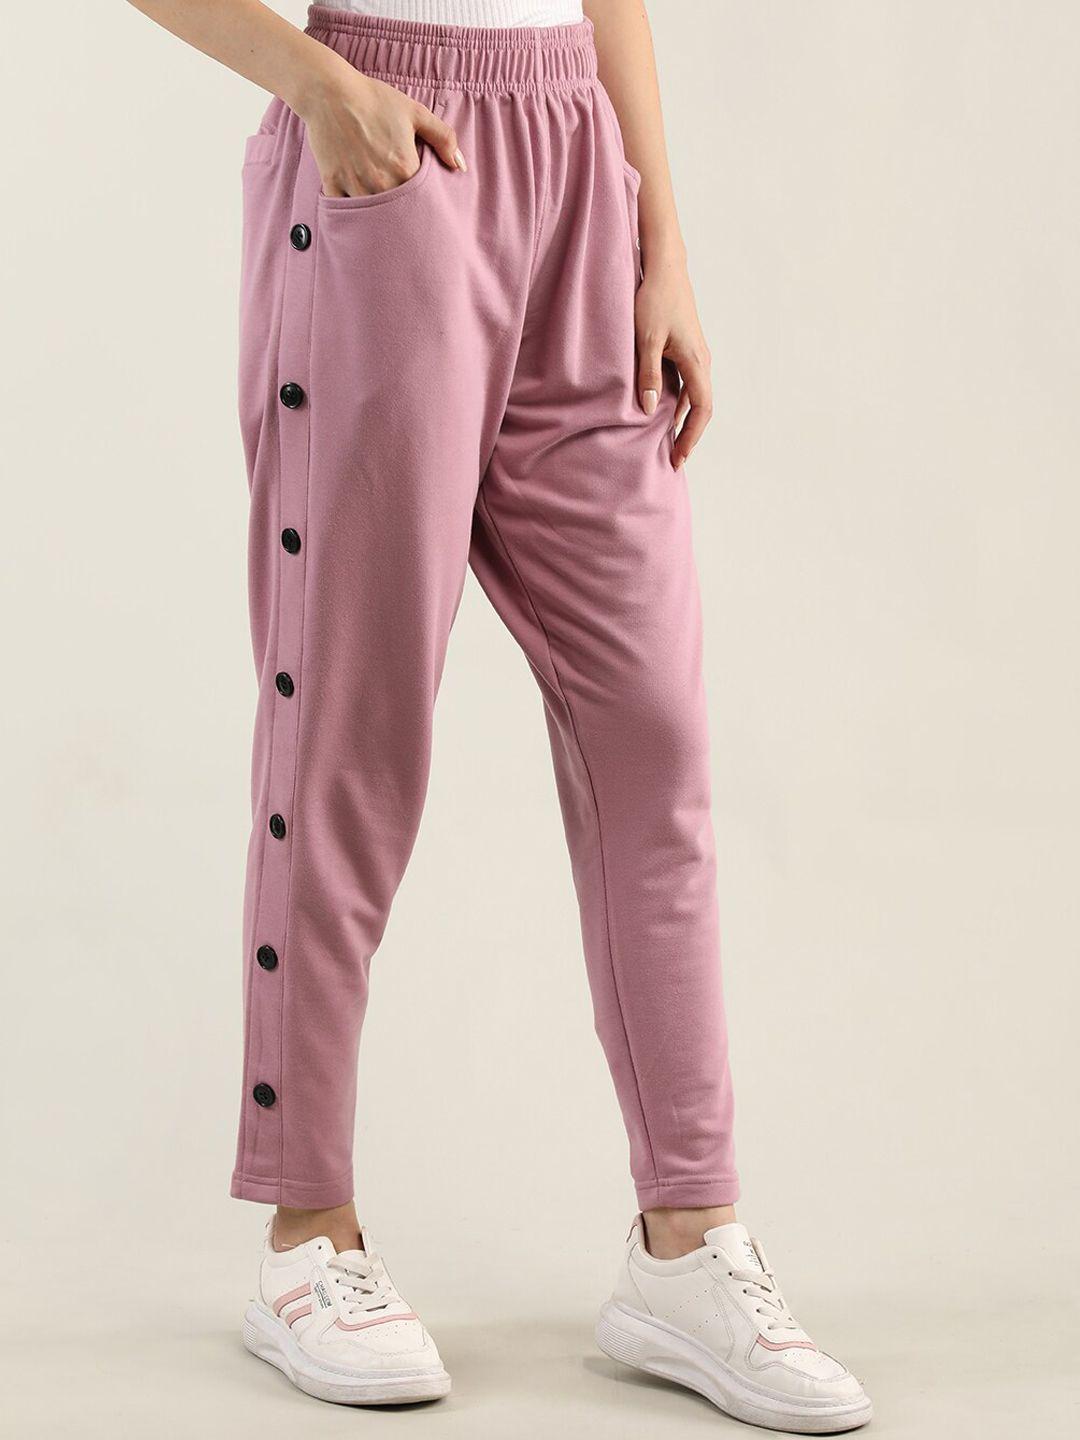 chkokko-women-pink-solid-pure-cotton-regular-fit-track-pants